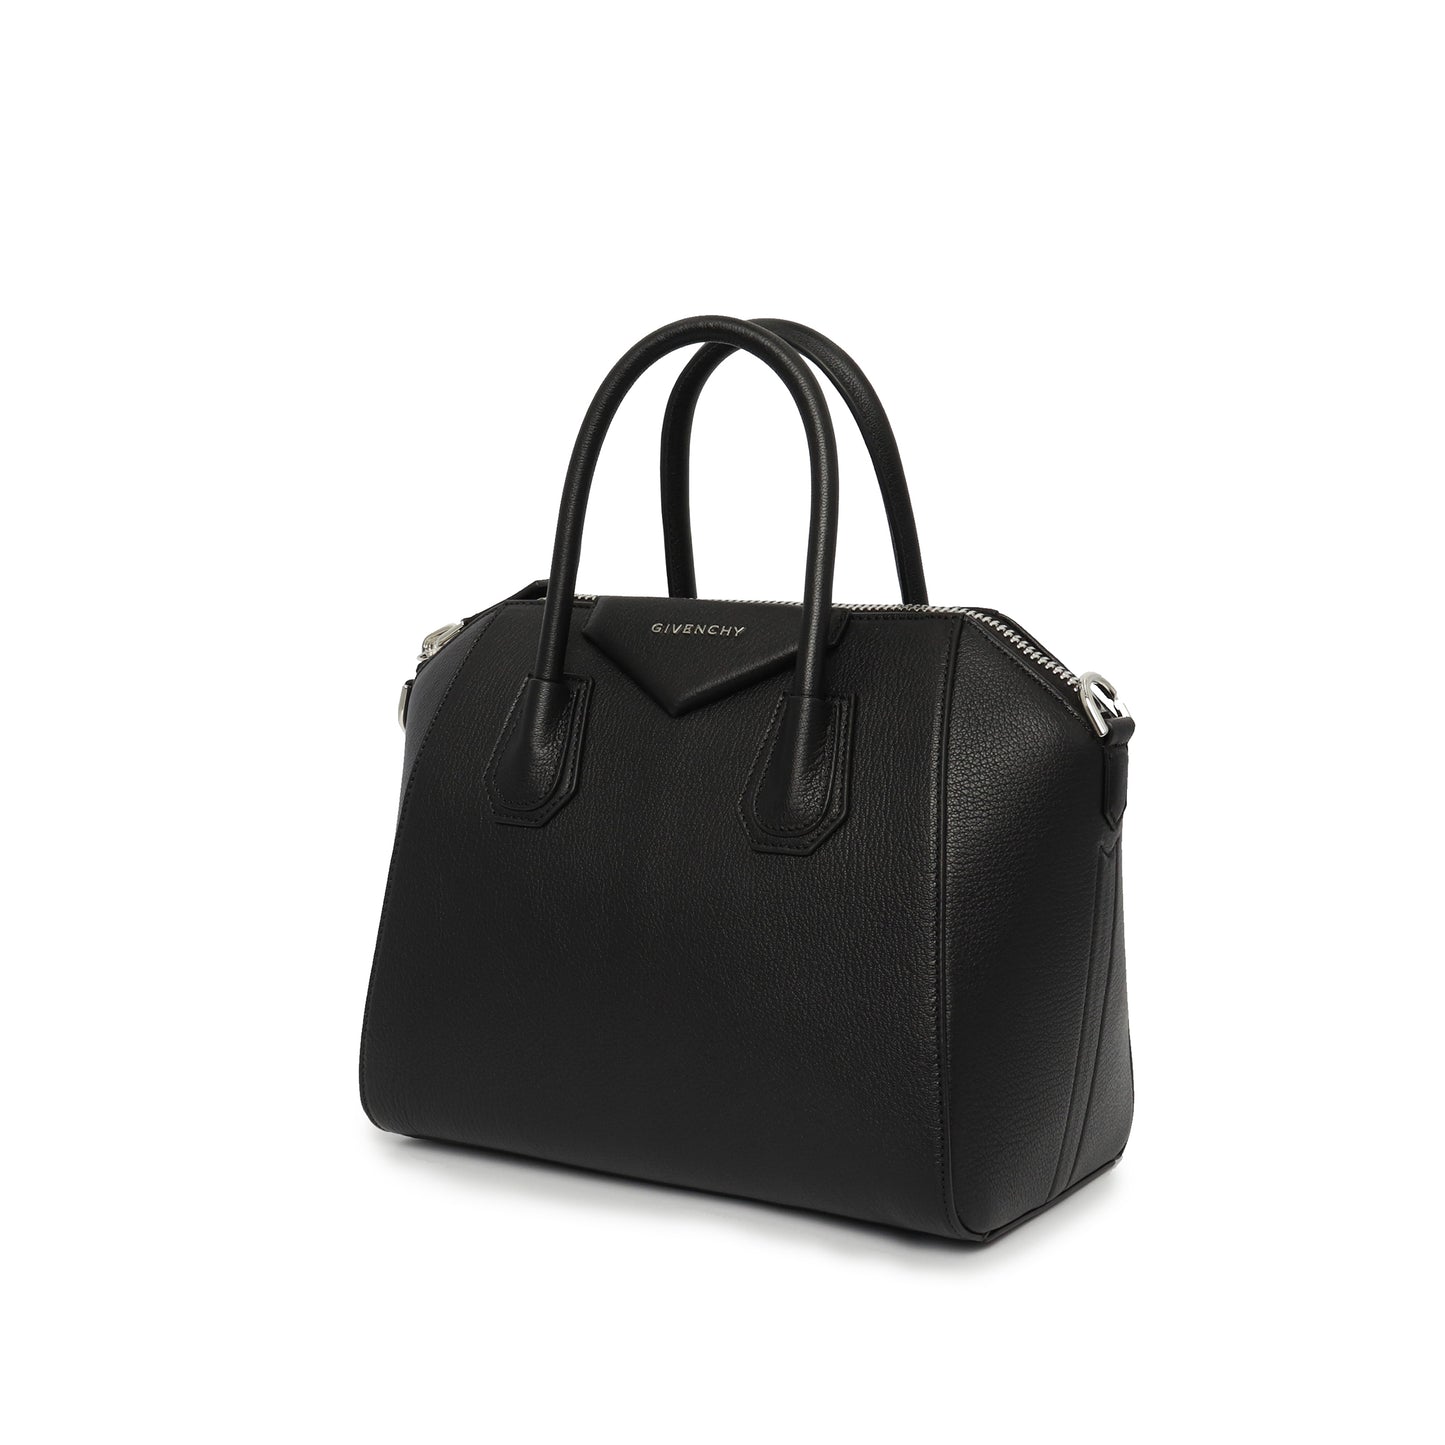 Small Antigona Bag in Grained Leather in Black